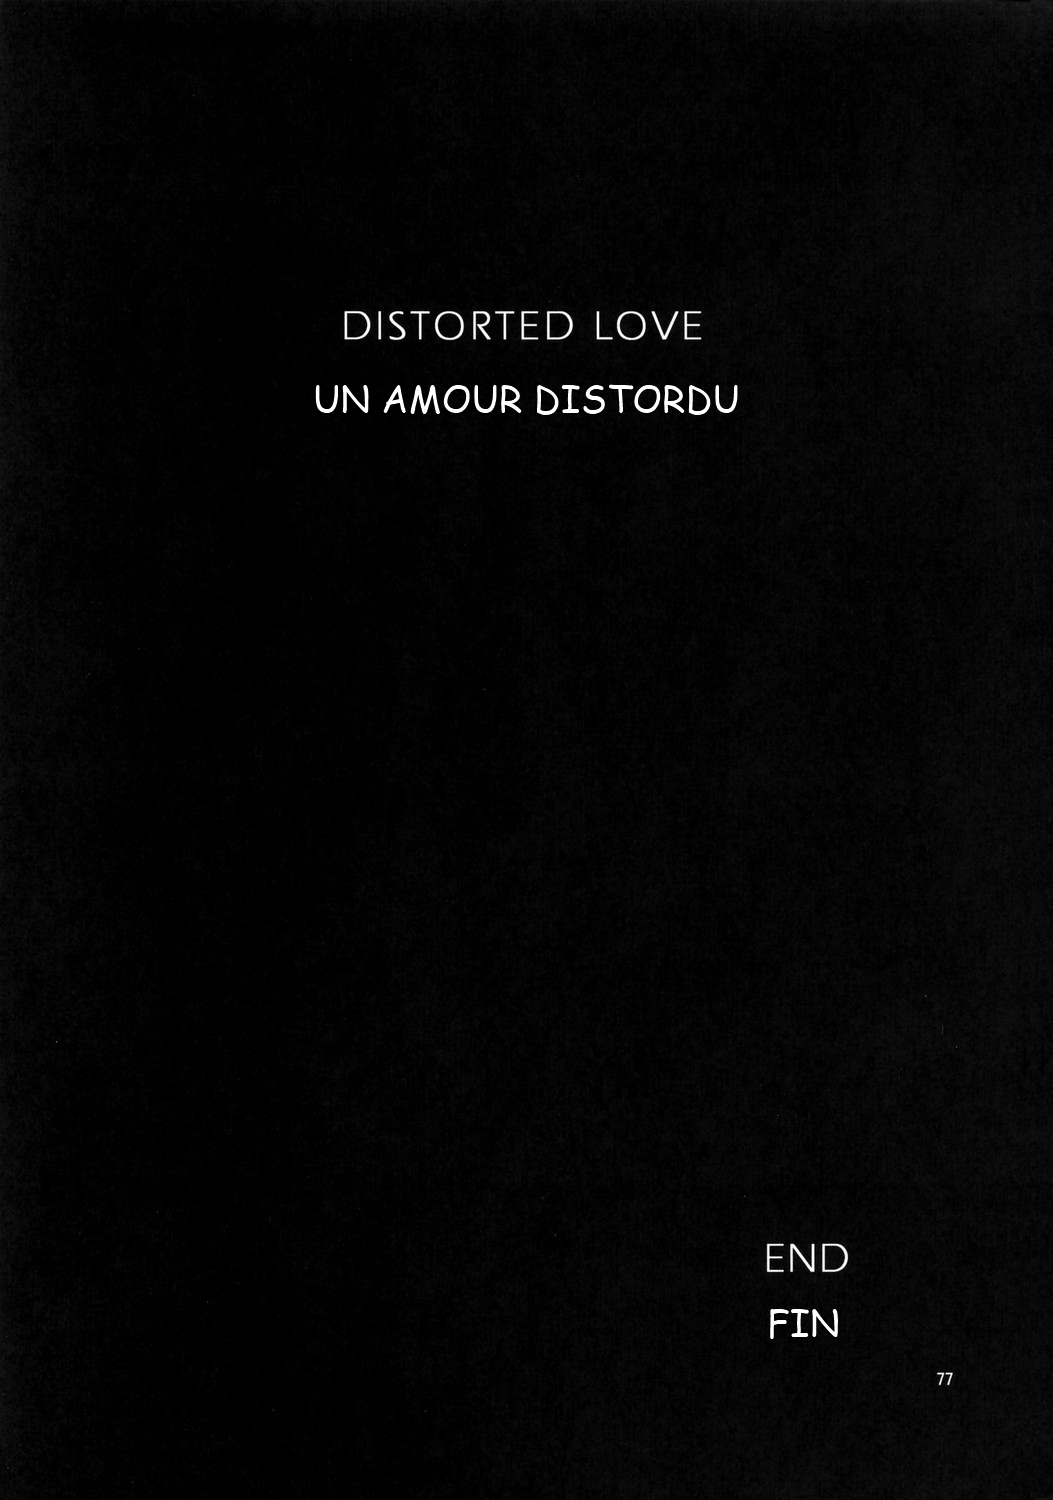 Distorted Love numero d'image 75